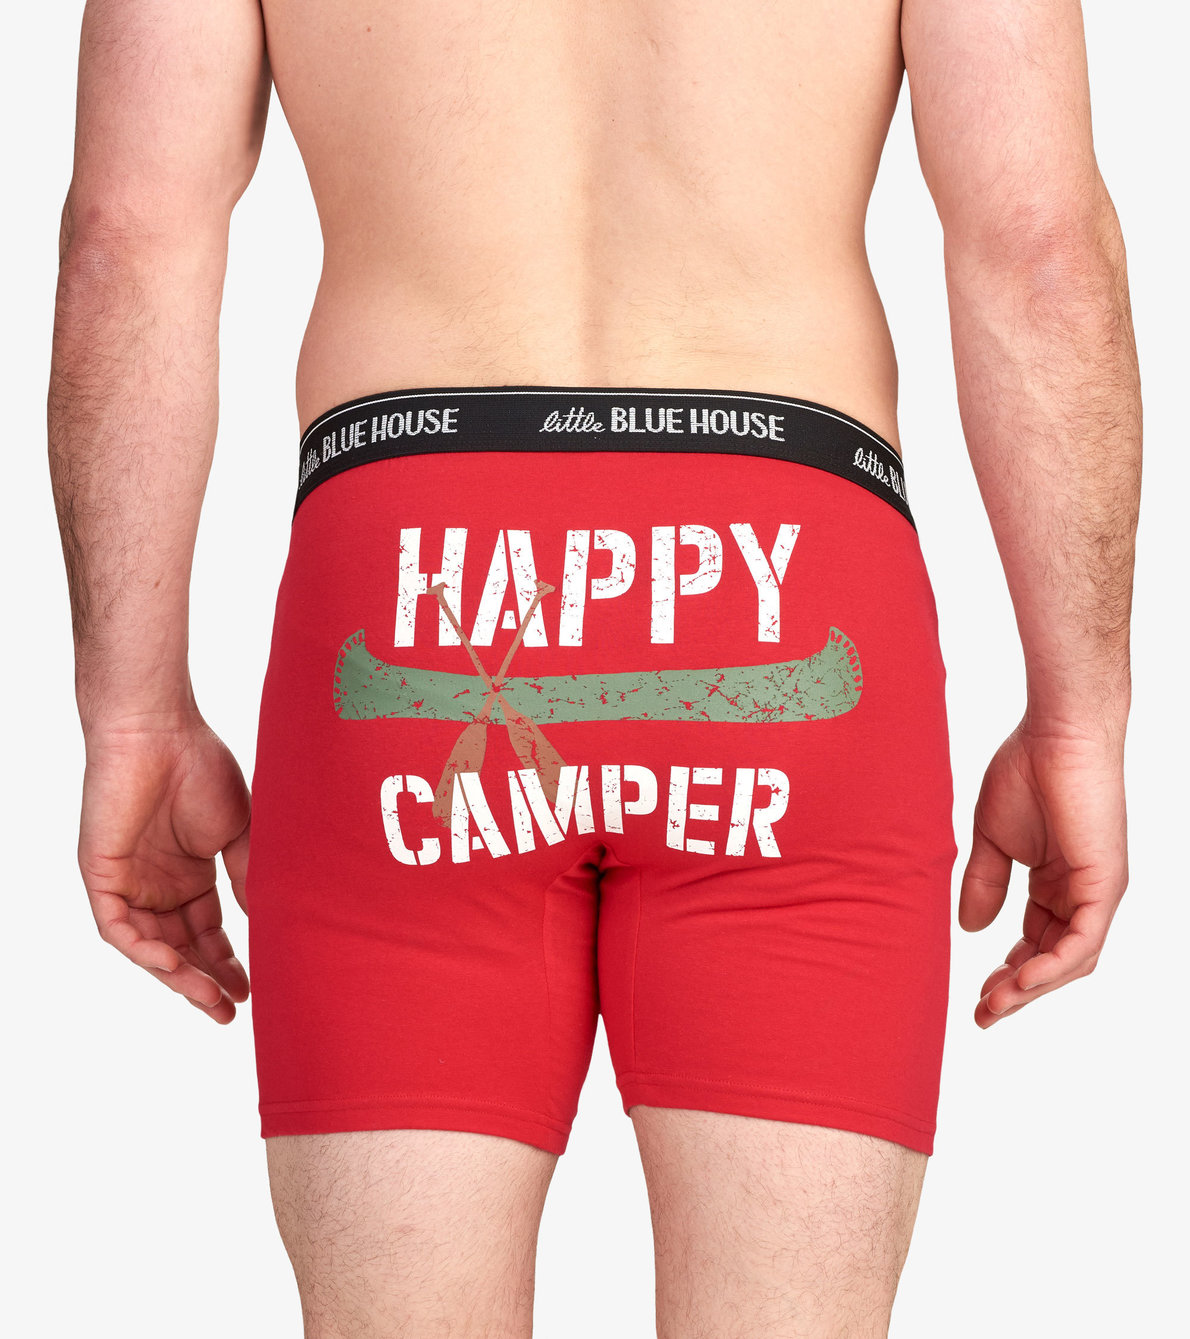 View larger image of Happy Camper Men's Boxer Briefs